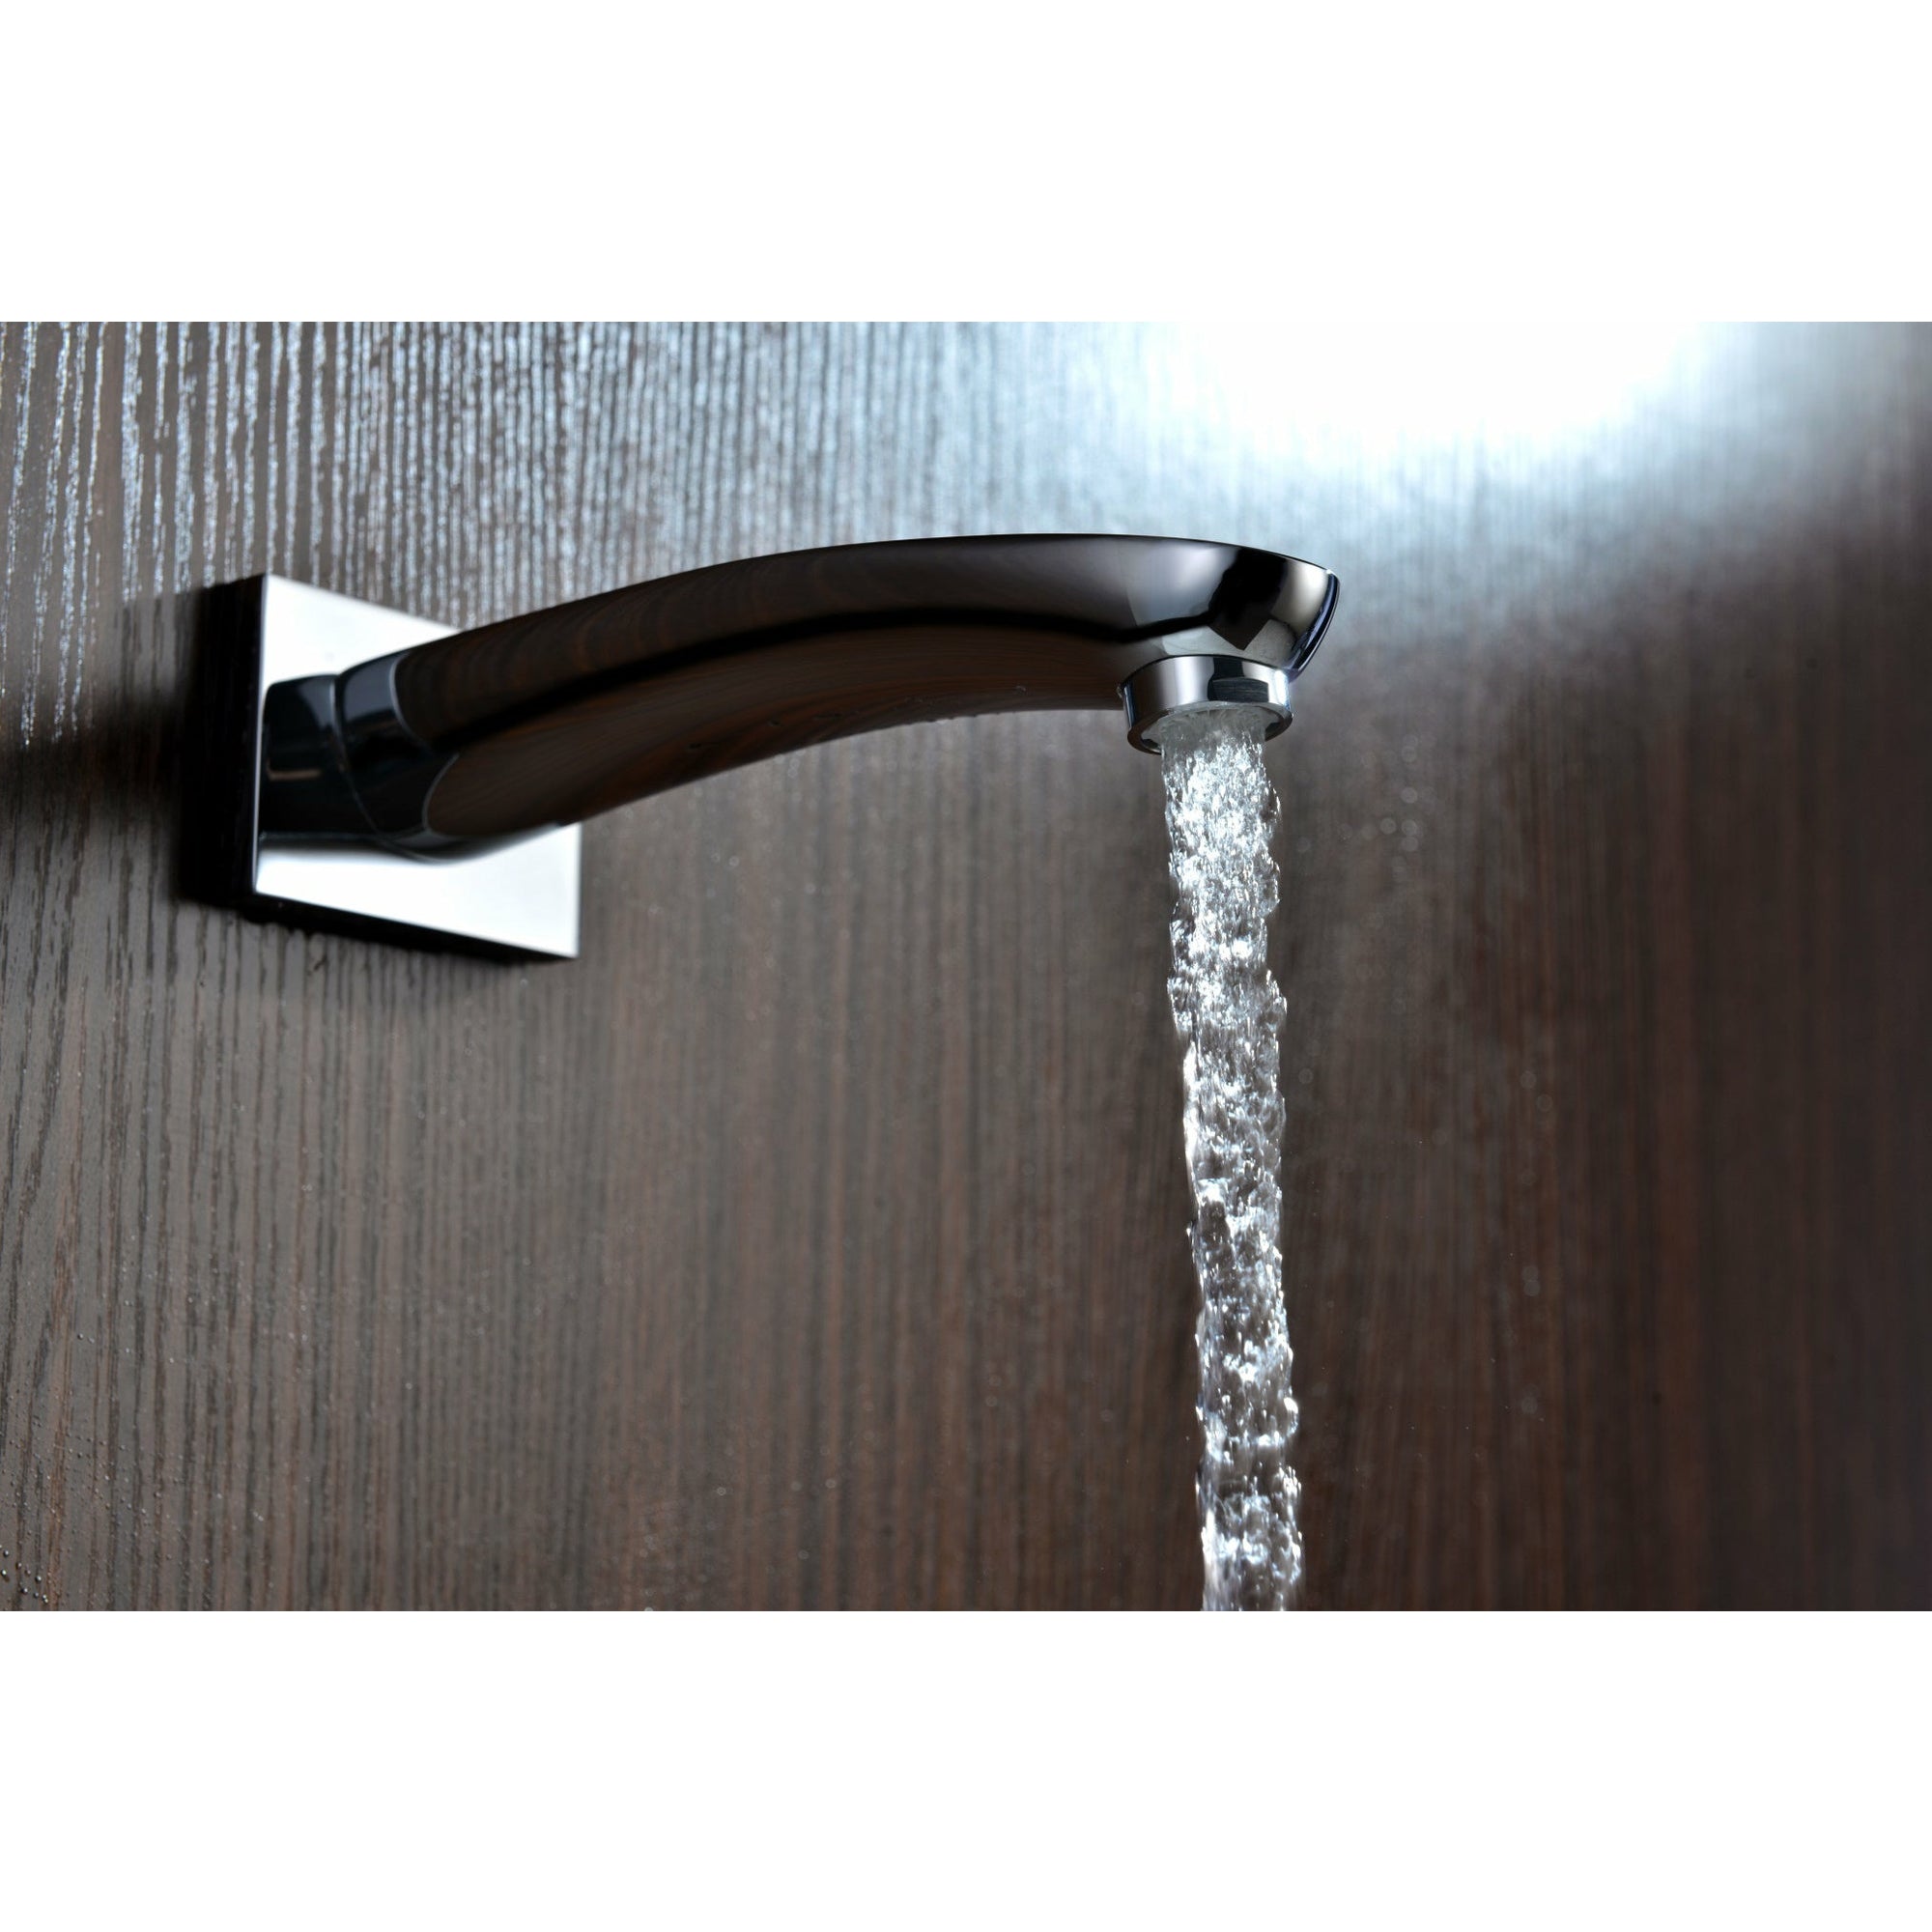 Anzzi Tempo Series 1-Handle 1-Spray Tub and Shower Faucet - Heavy Rain Showerhead Technology (Polished Chrome)- L-AZ026 - Vital Hydrotherapy